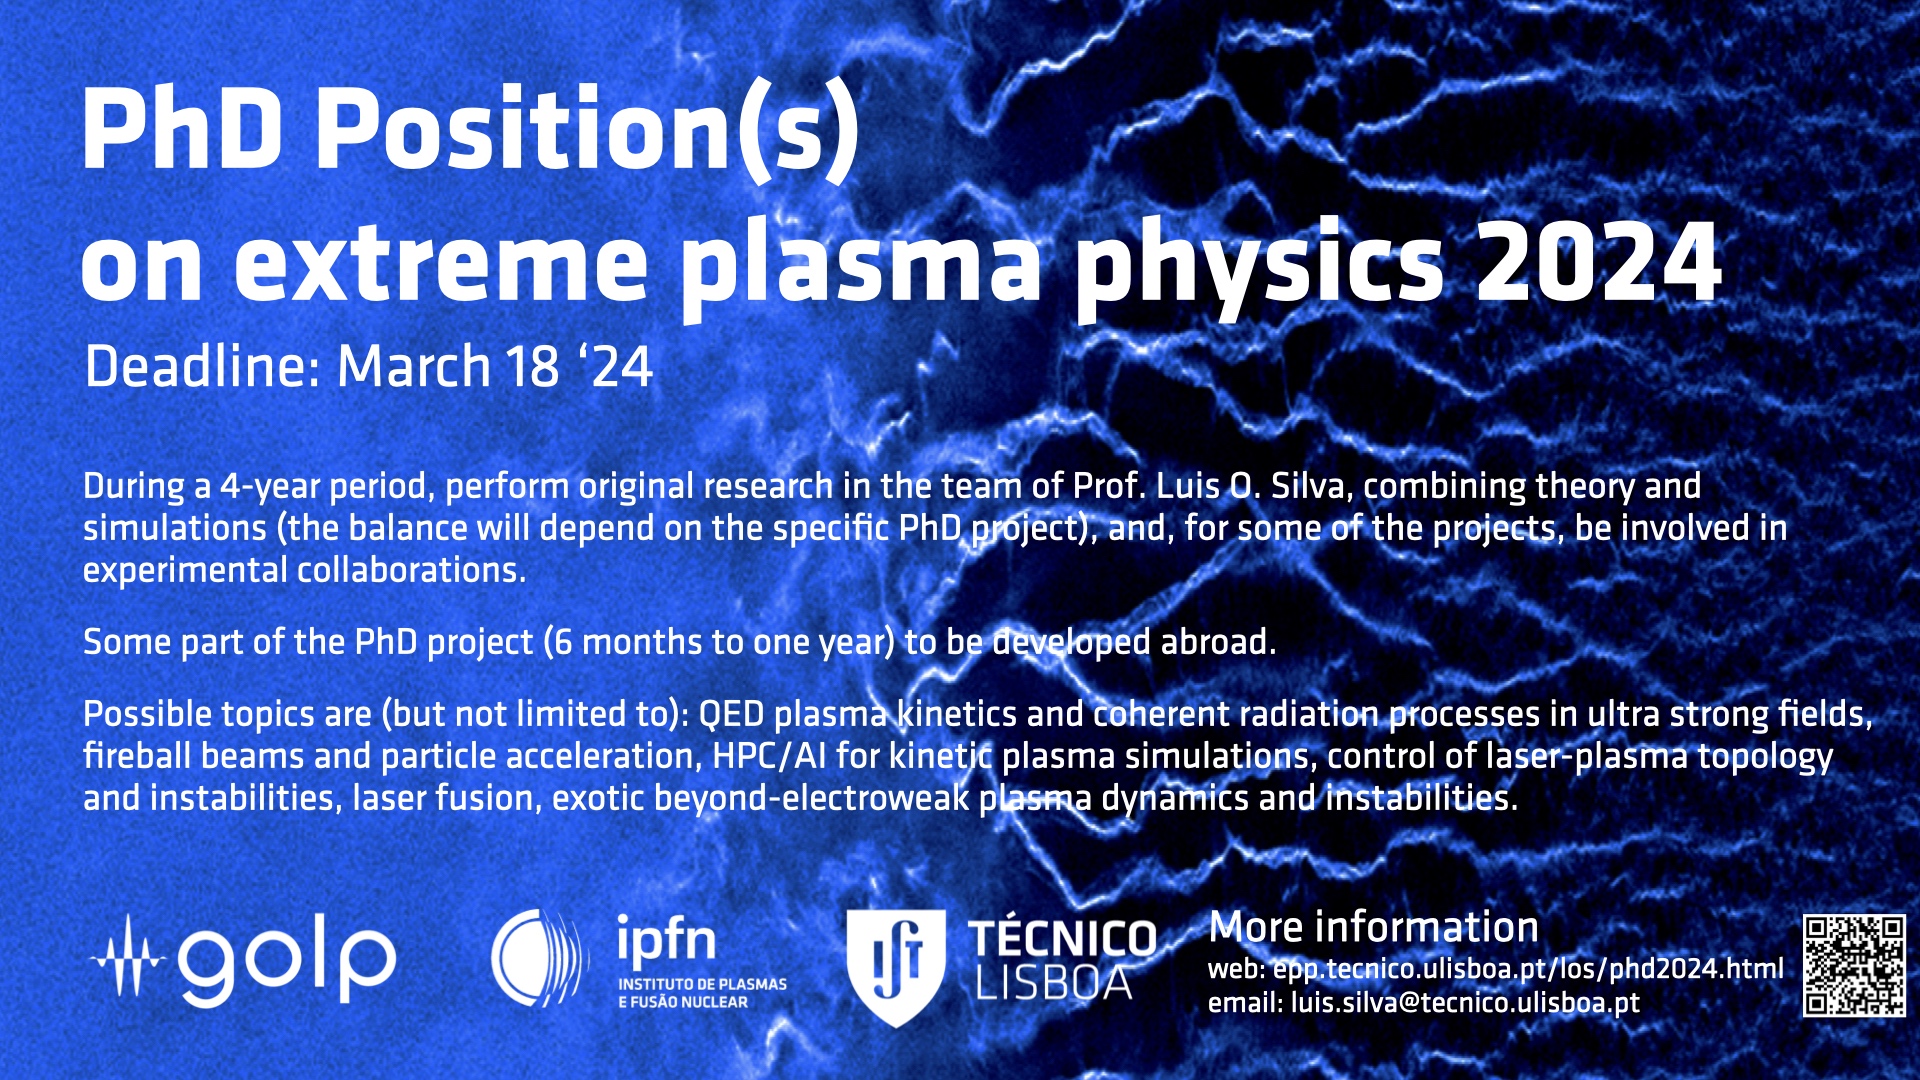 PhD position(s) in extreme plasma physics 2024 extreme plasma physics